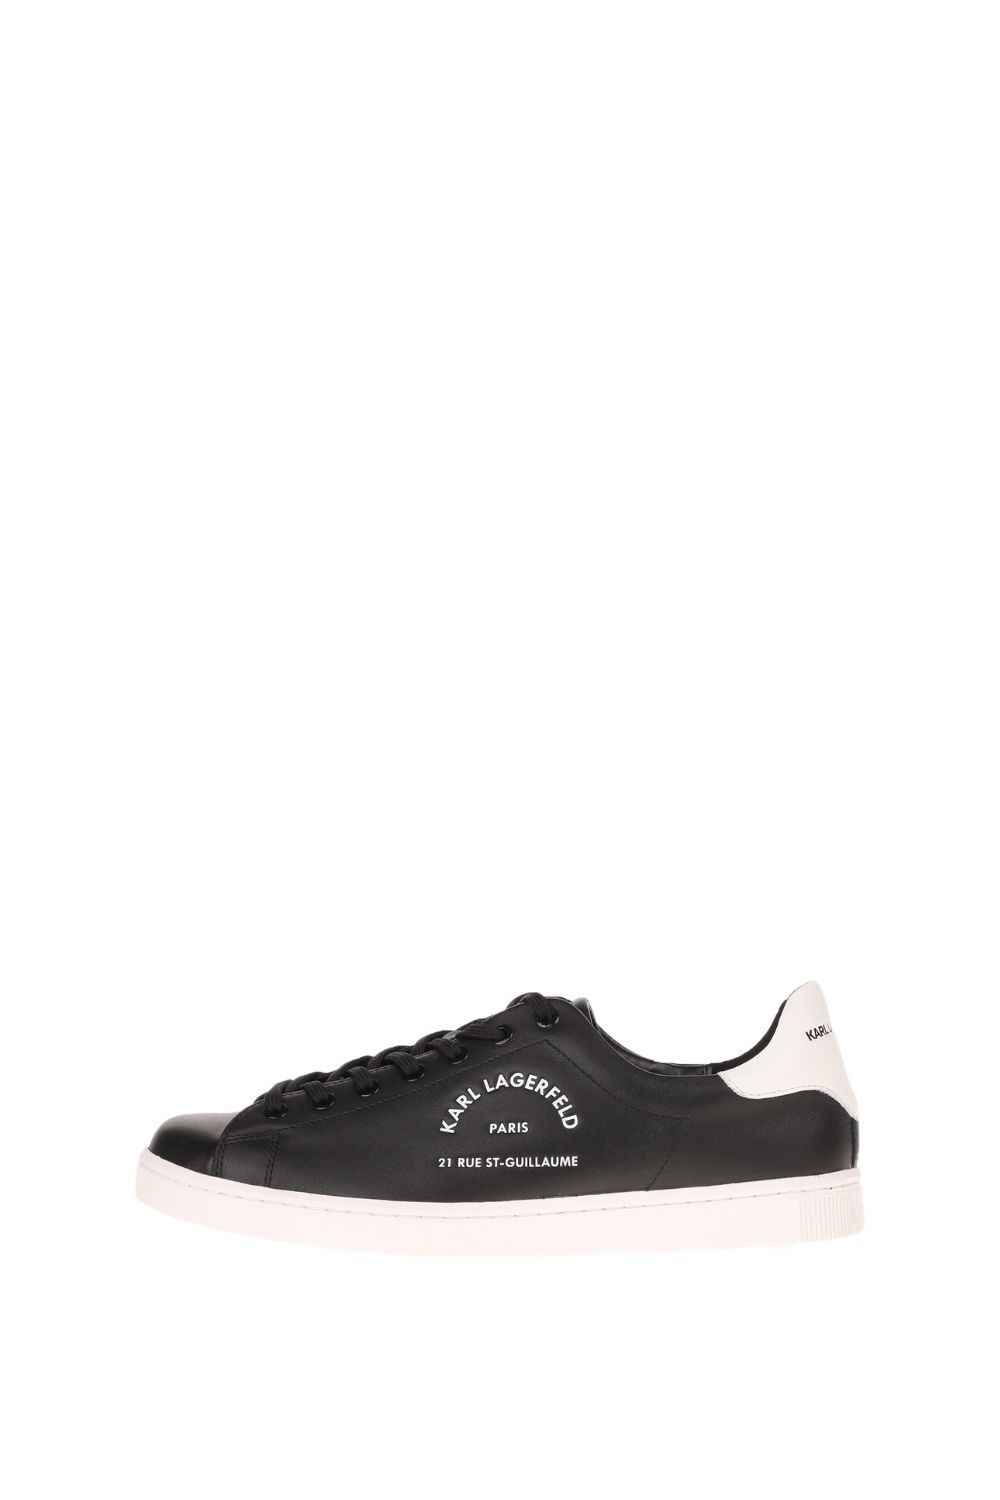 KARL LAGERFELD - Γυναικεία sneakers KARL LAGERFELD Maison μαύρα Γυναικεία/Παπούτσια/Sneakers